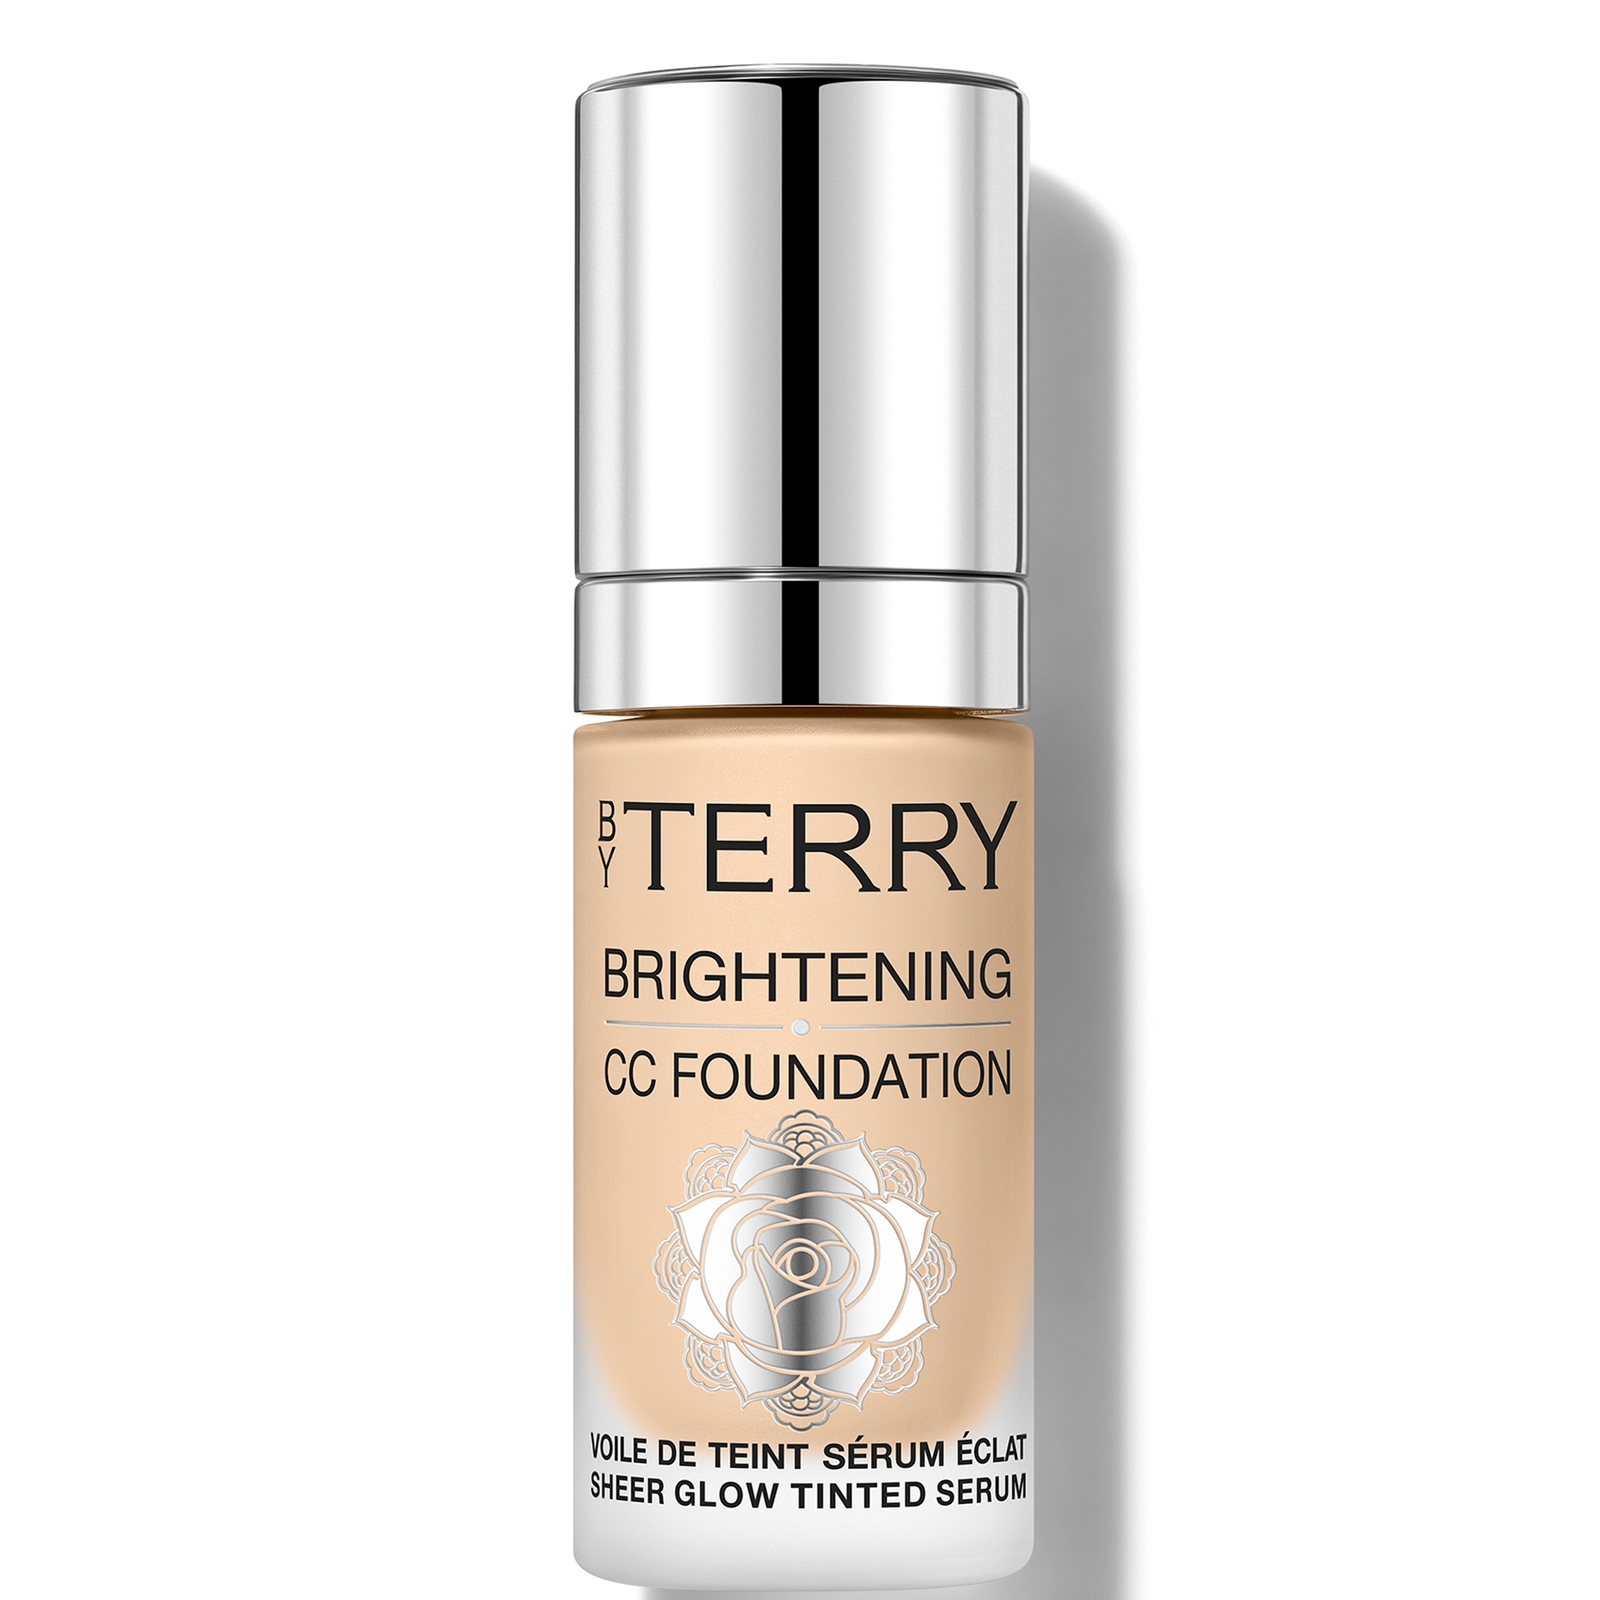 By Terry Brightening Cc Foundation 30ml (various Shades) - 3n - Medium Light Neutral